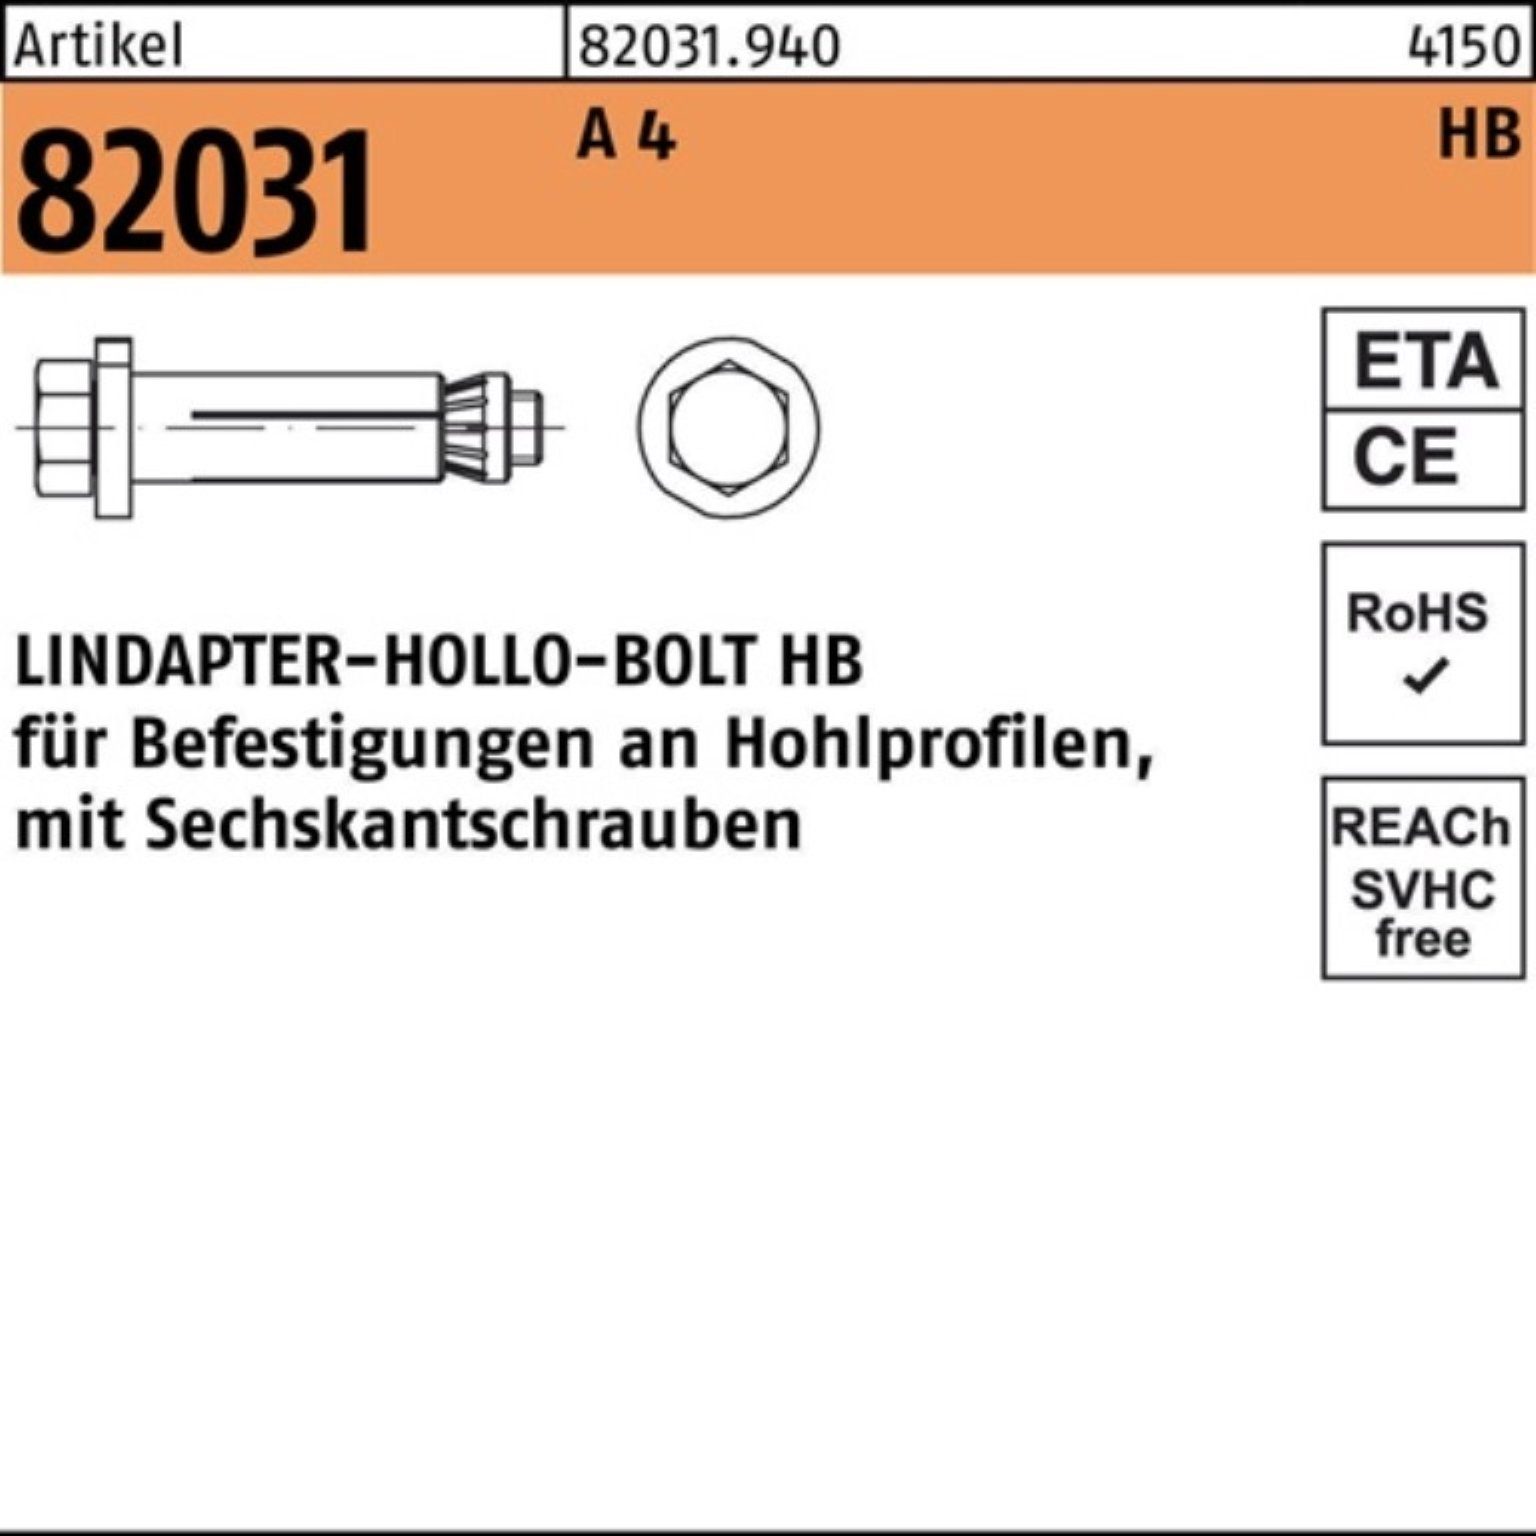 6-ktschraube 4 1 Lindapter 100er A Pack (150/86) Hohlraumdübel R 82031 HB Hohlraumdübel 20-3